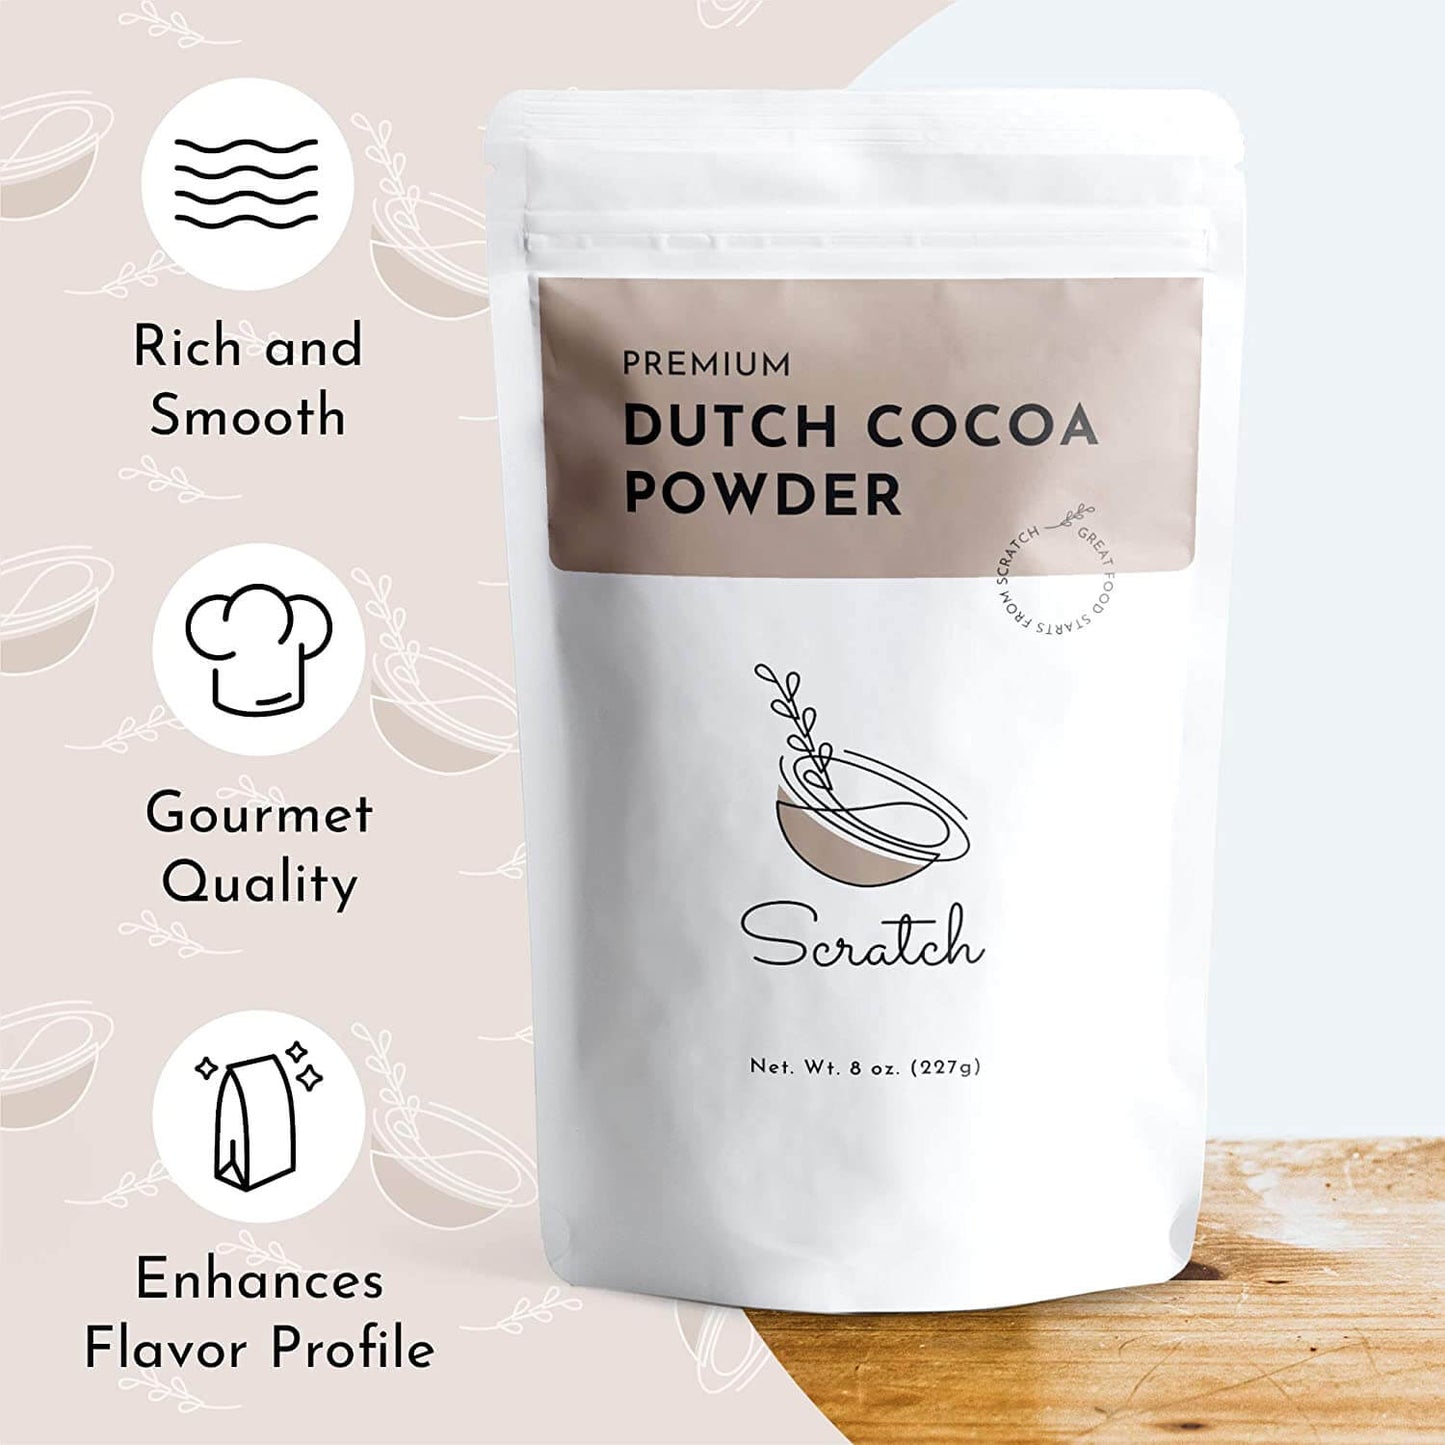 Scratch Premium Dutch Cocoa Powder - 8 oz - Baking Properties